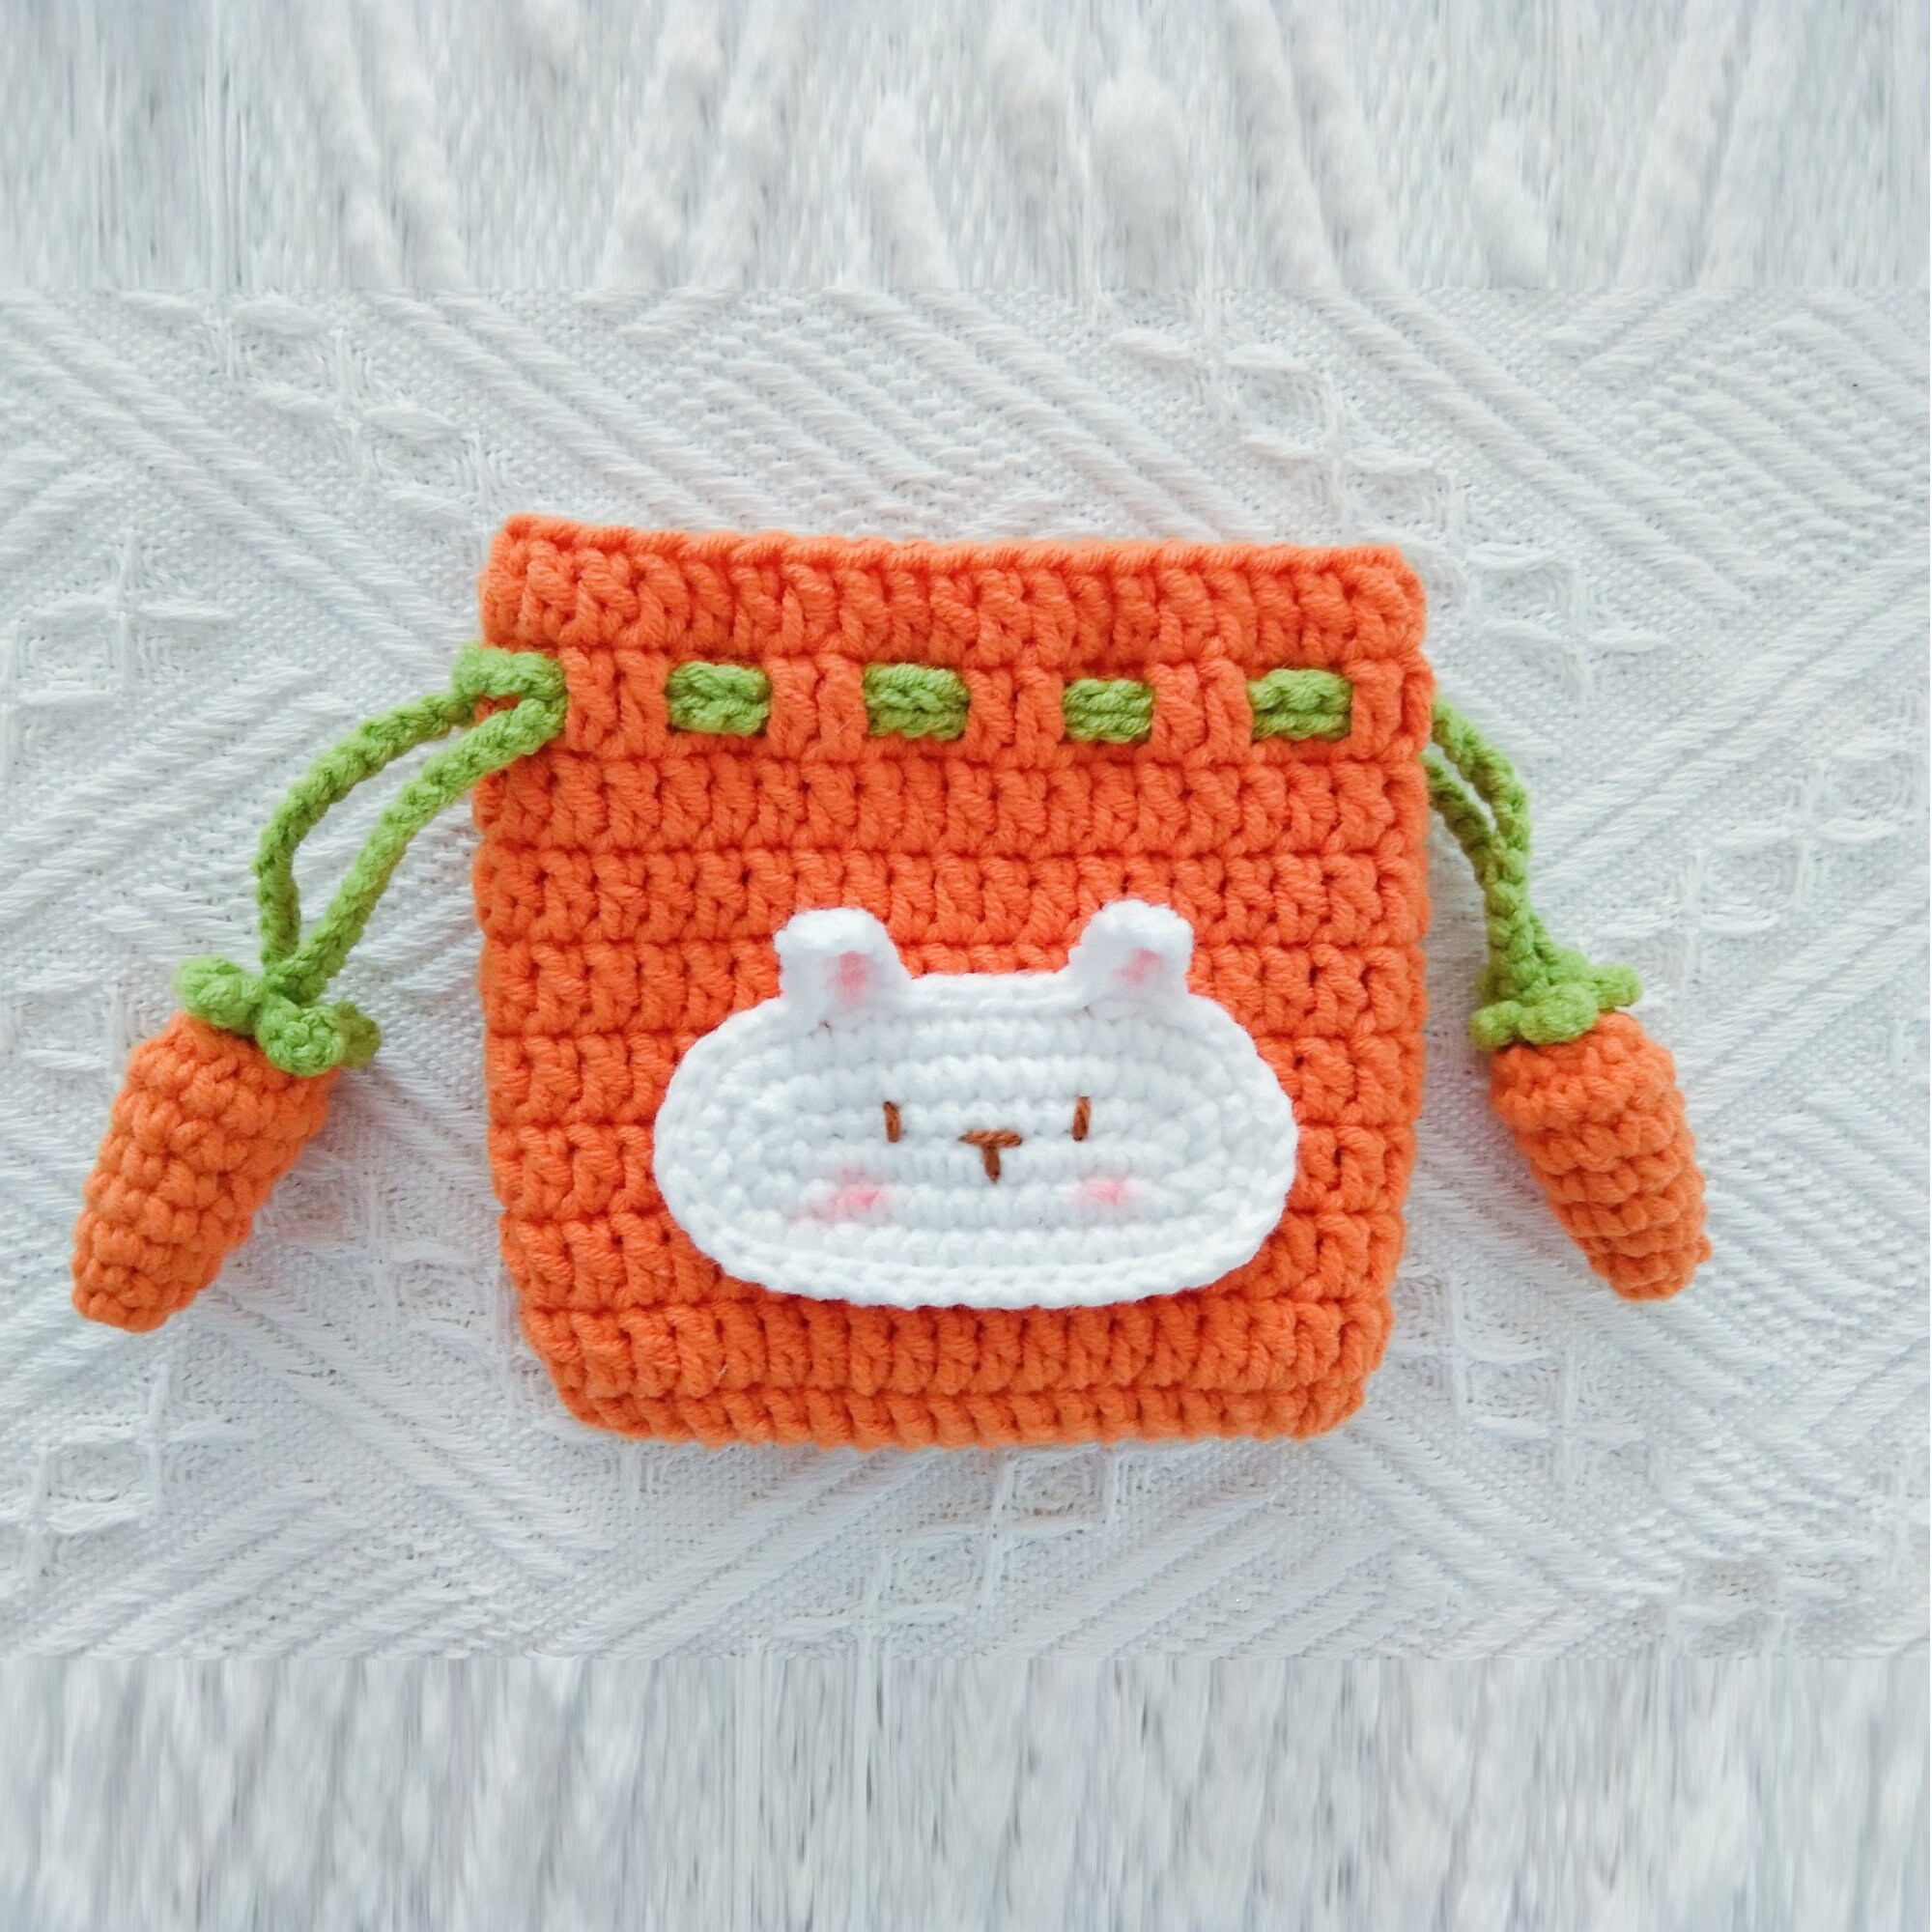 Cute Tangerine Shaped Small Storage Bag, Crochet Drawstring Bags, Mini Handwoven Cotton Handbag, Coin Purse Pouch, Orange Knitting Change Wallet